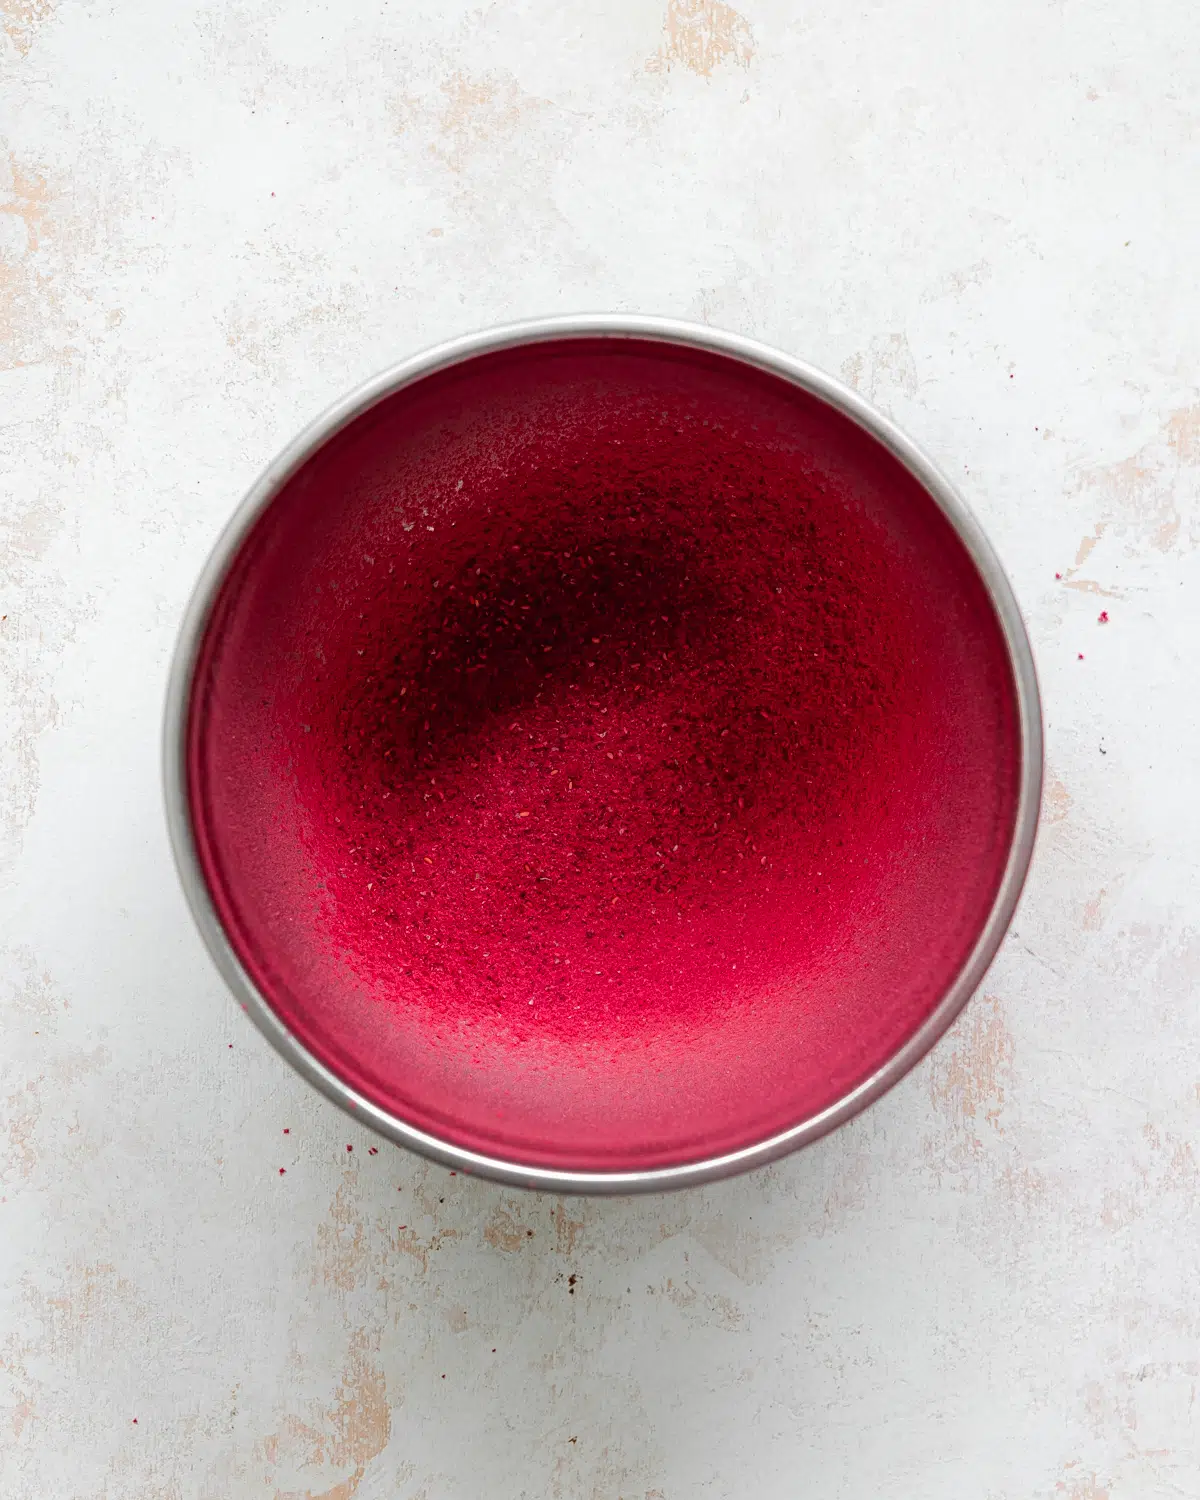 raspberry powder in a bowl.